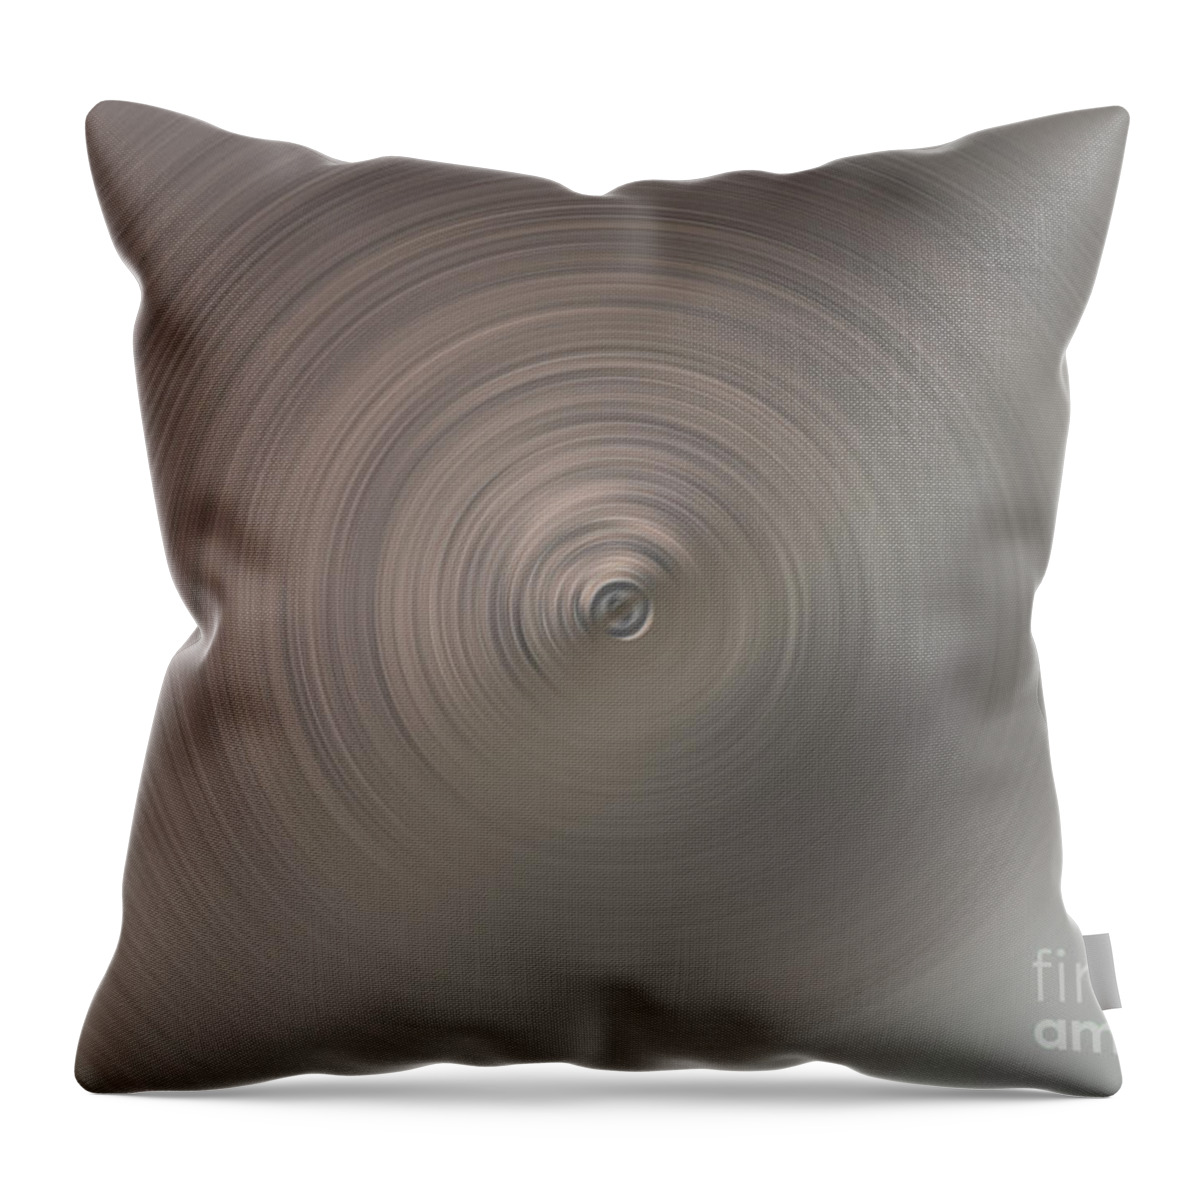 Abstract Throw Pillow featuring the photograph The Center of Tornado by Ausra Huntington nee Paulauskaite